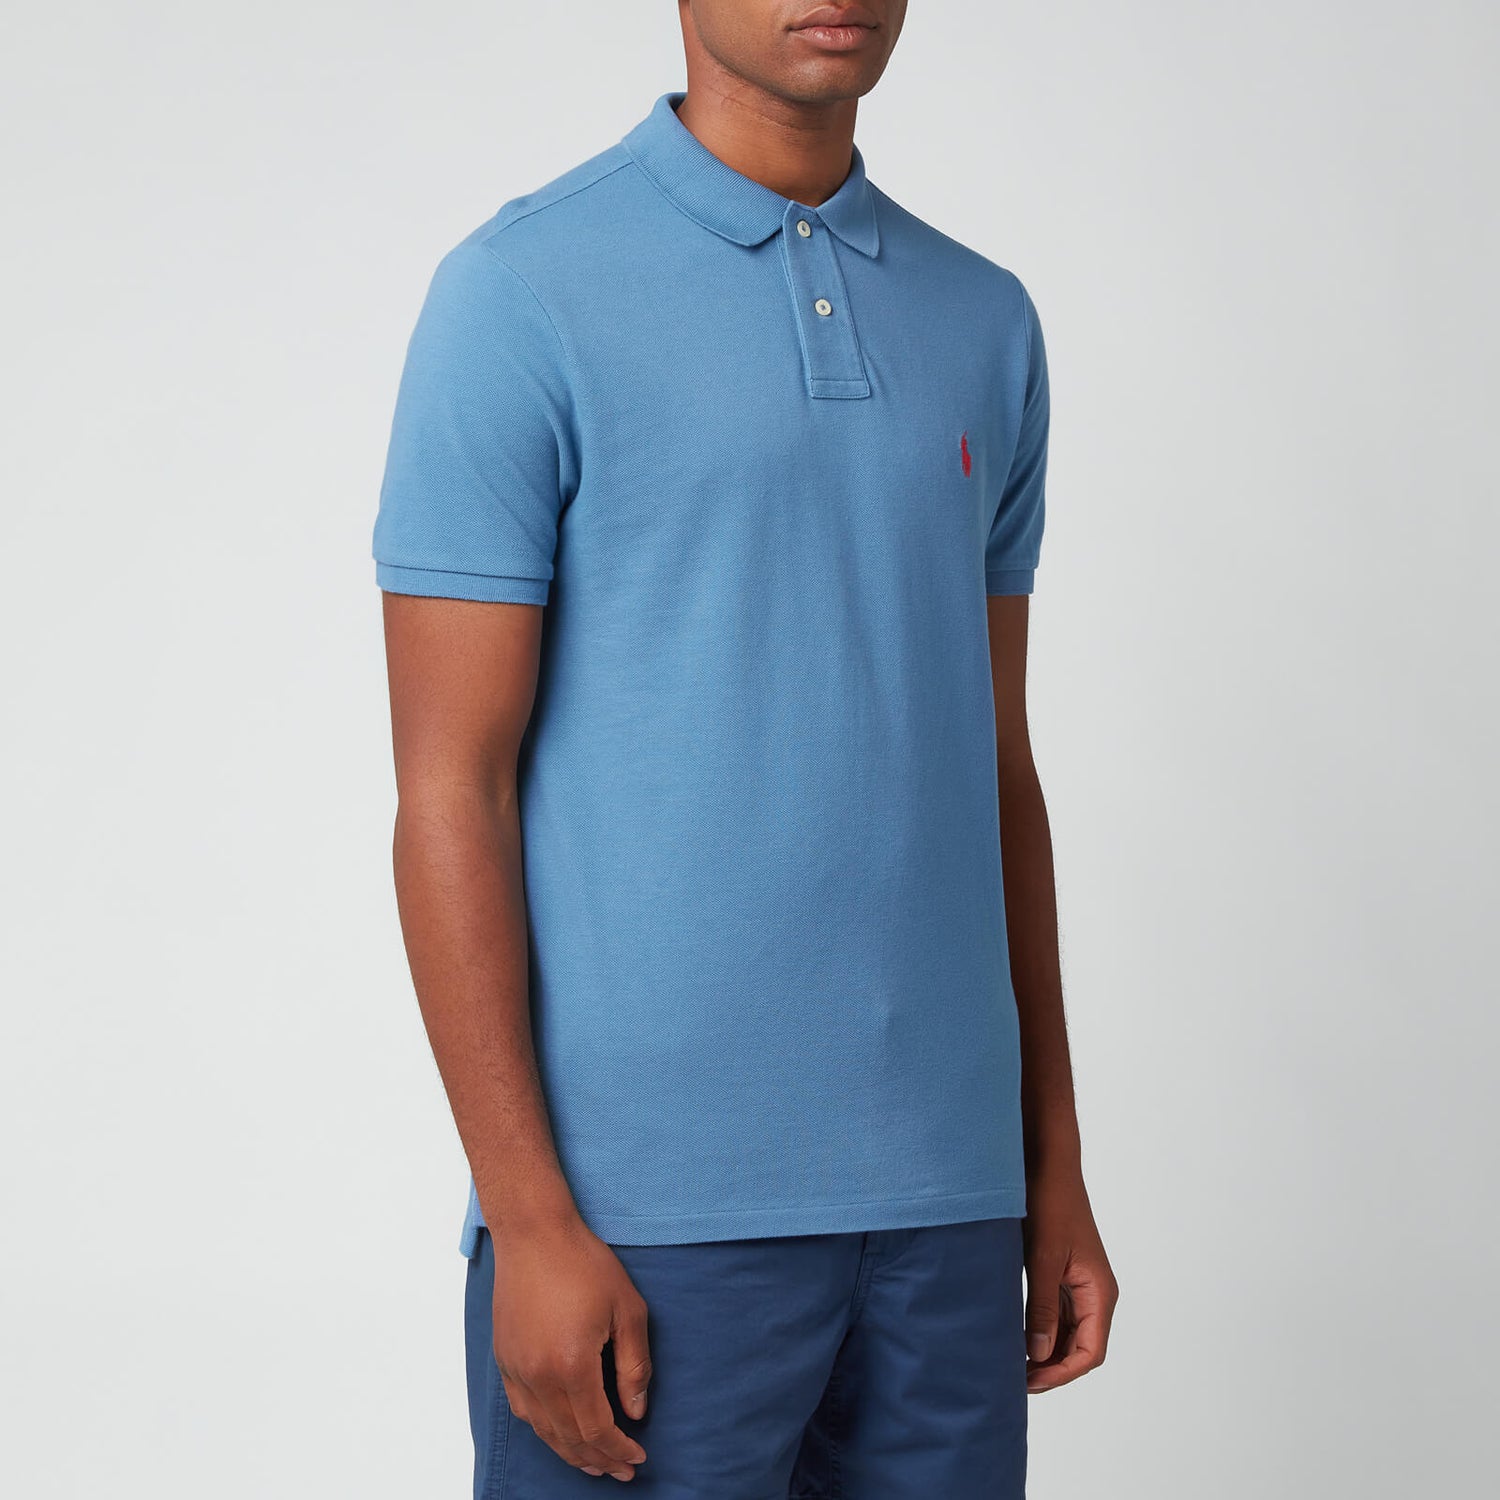 Polo Ralph Lauren Men's Mesh Polo Shirt - Delta Blue